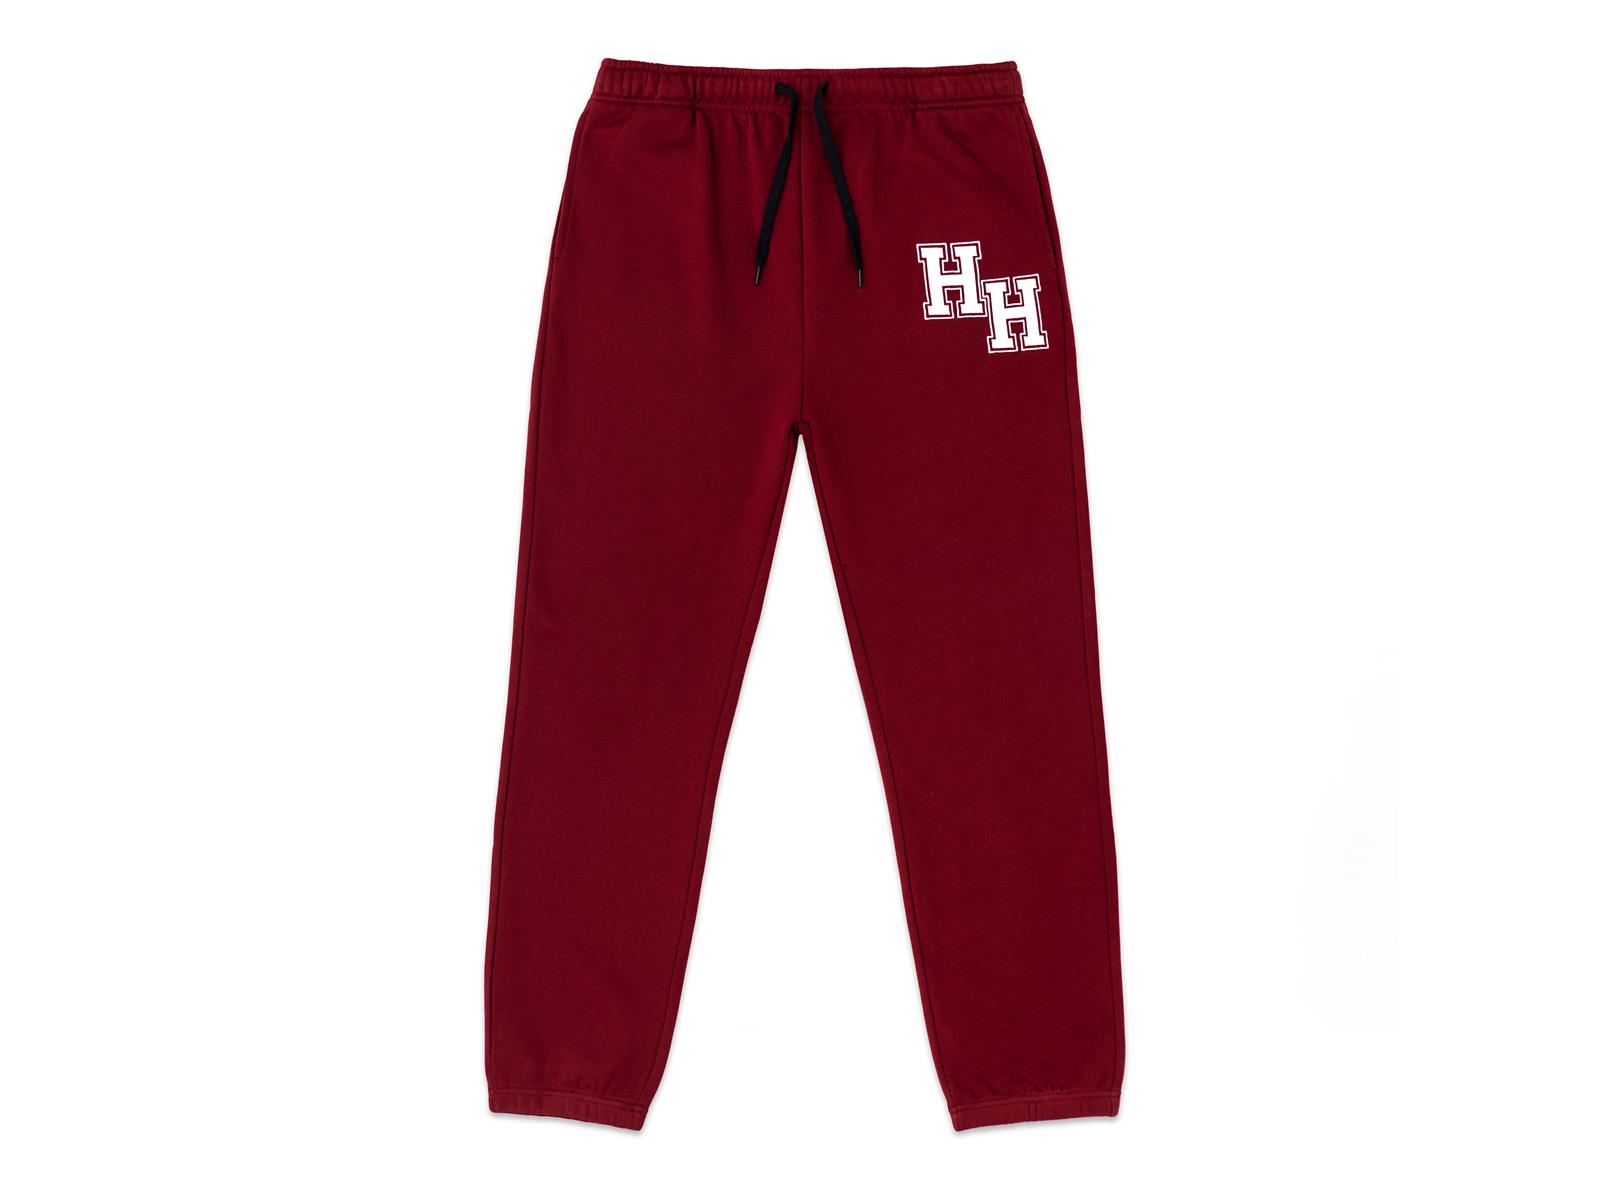 Hardies Hardware - Emboidered Sweatpants - Burgundy